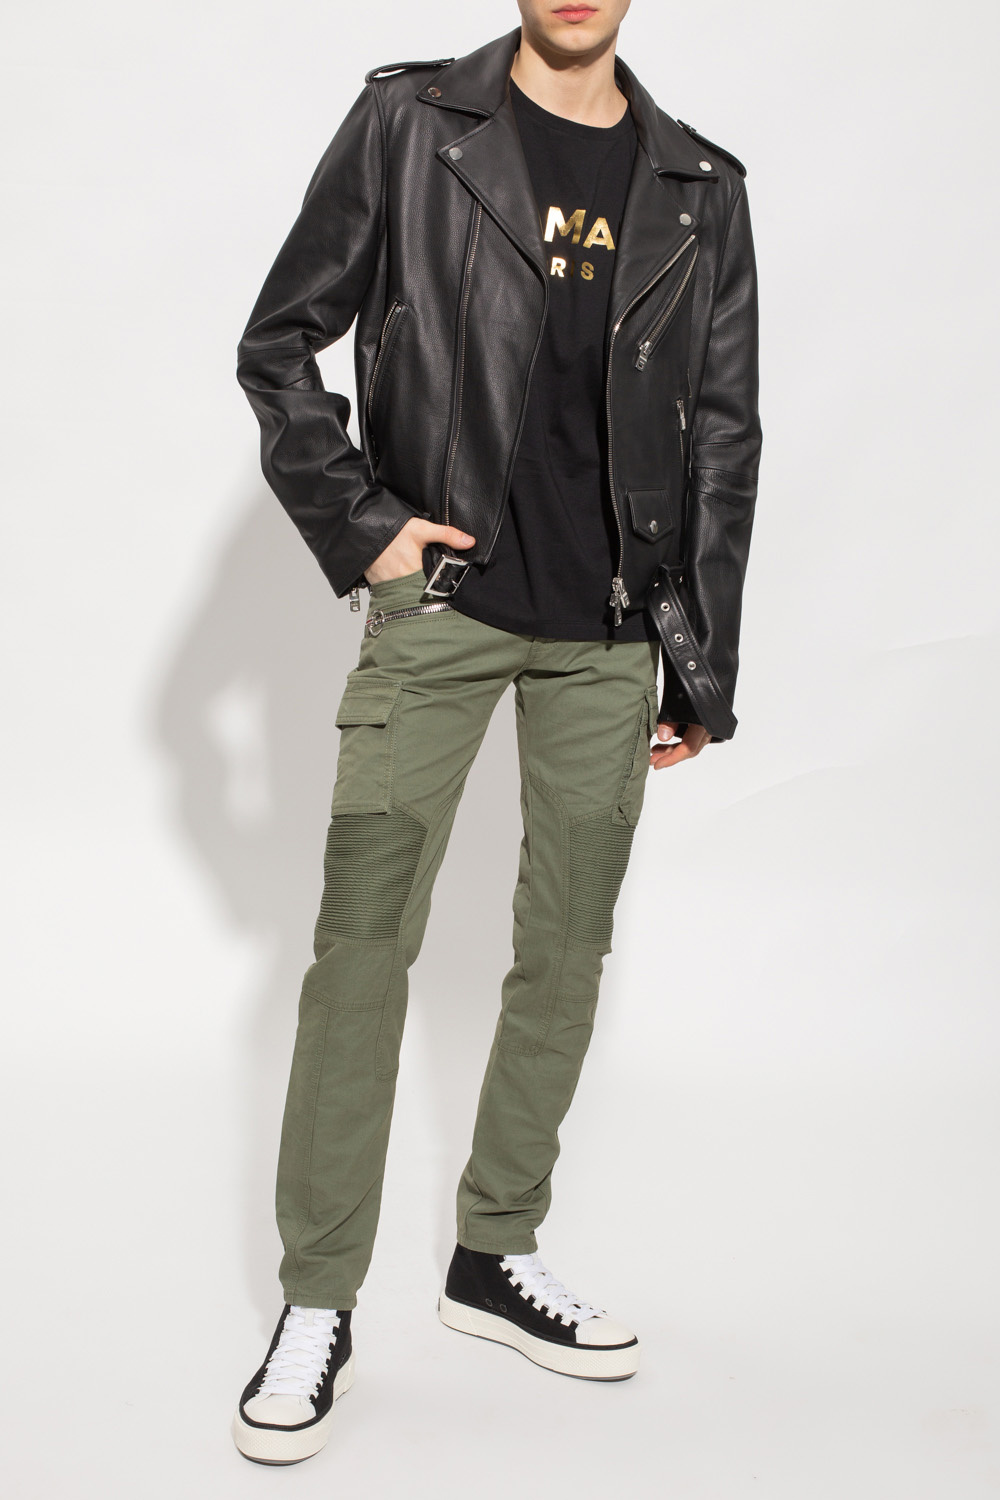 Balmain Leather Pants Womens ~ Size FR 40 Biker Style 100